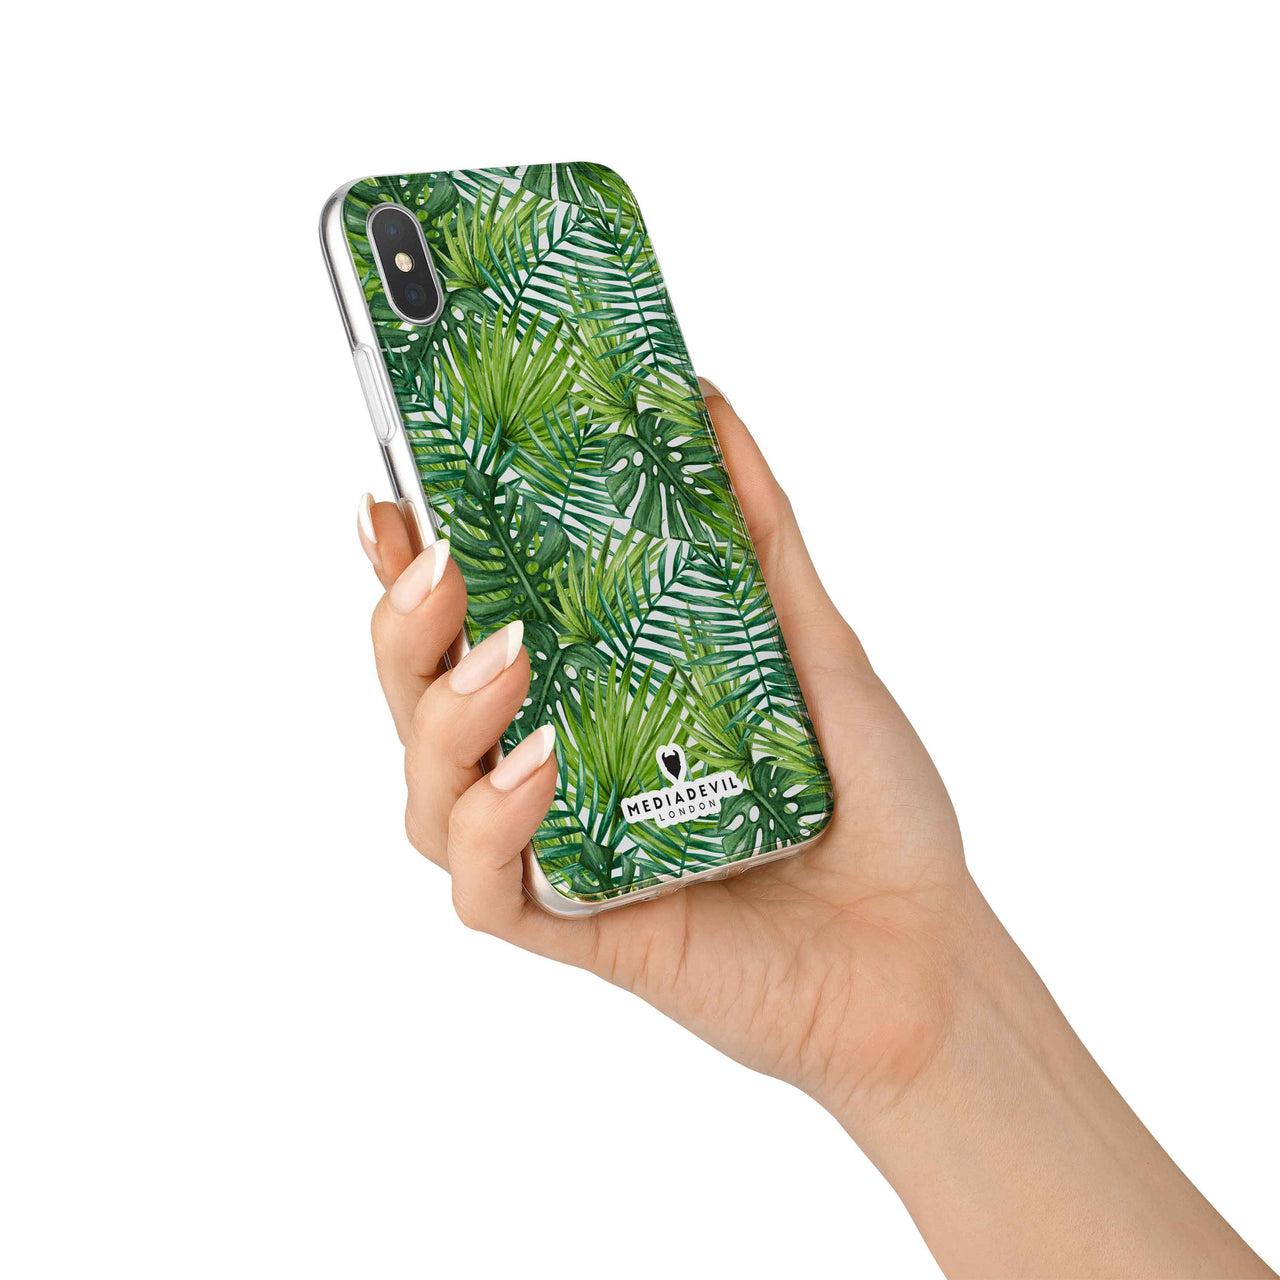 iPhone X / XS Case - Palm Leaves Pattern - Reinforced TPU Gel Case